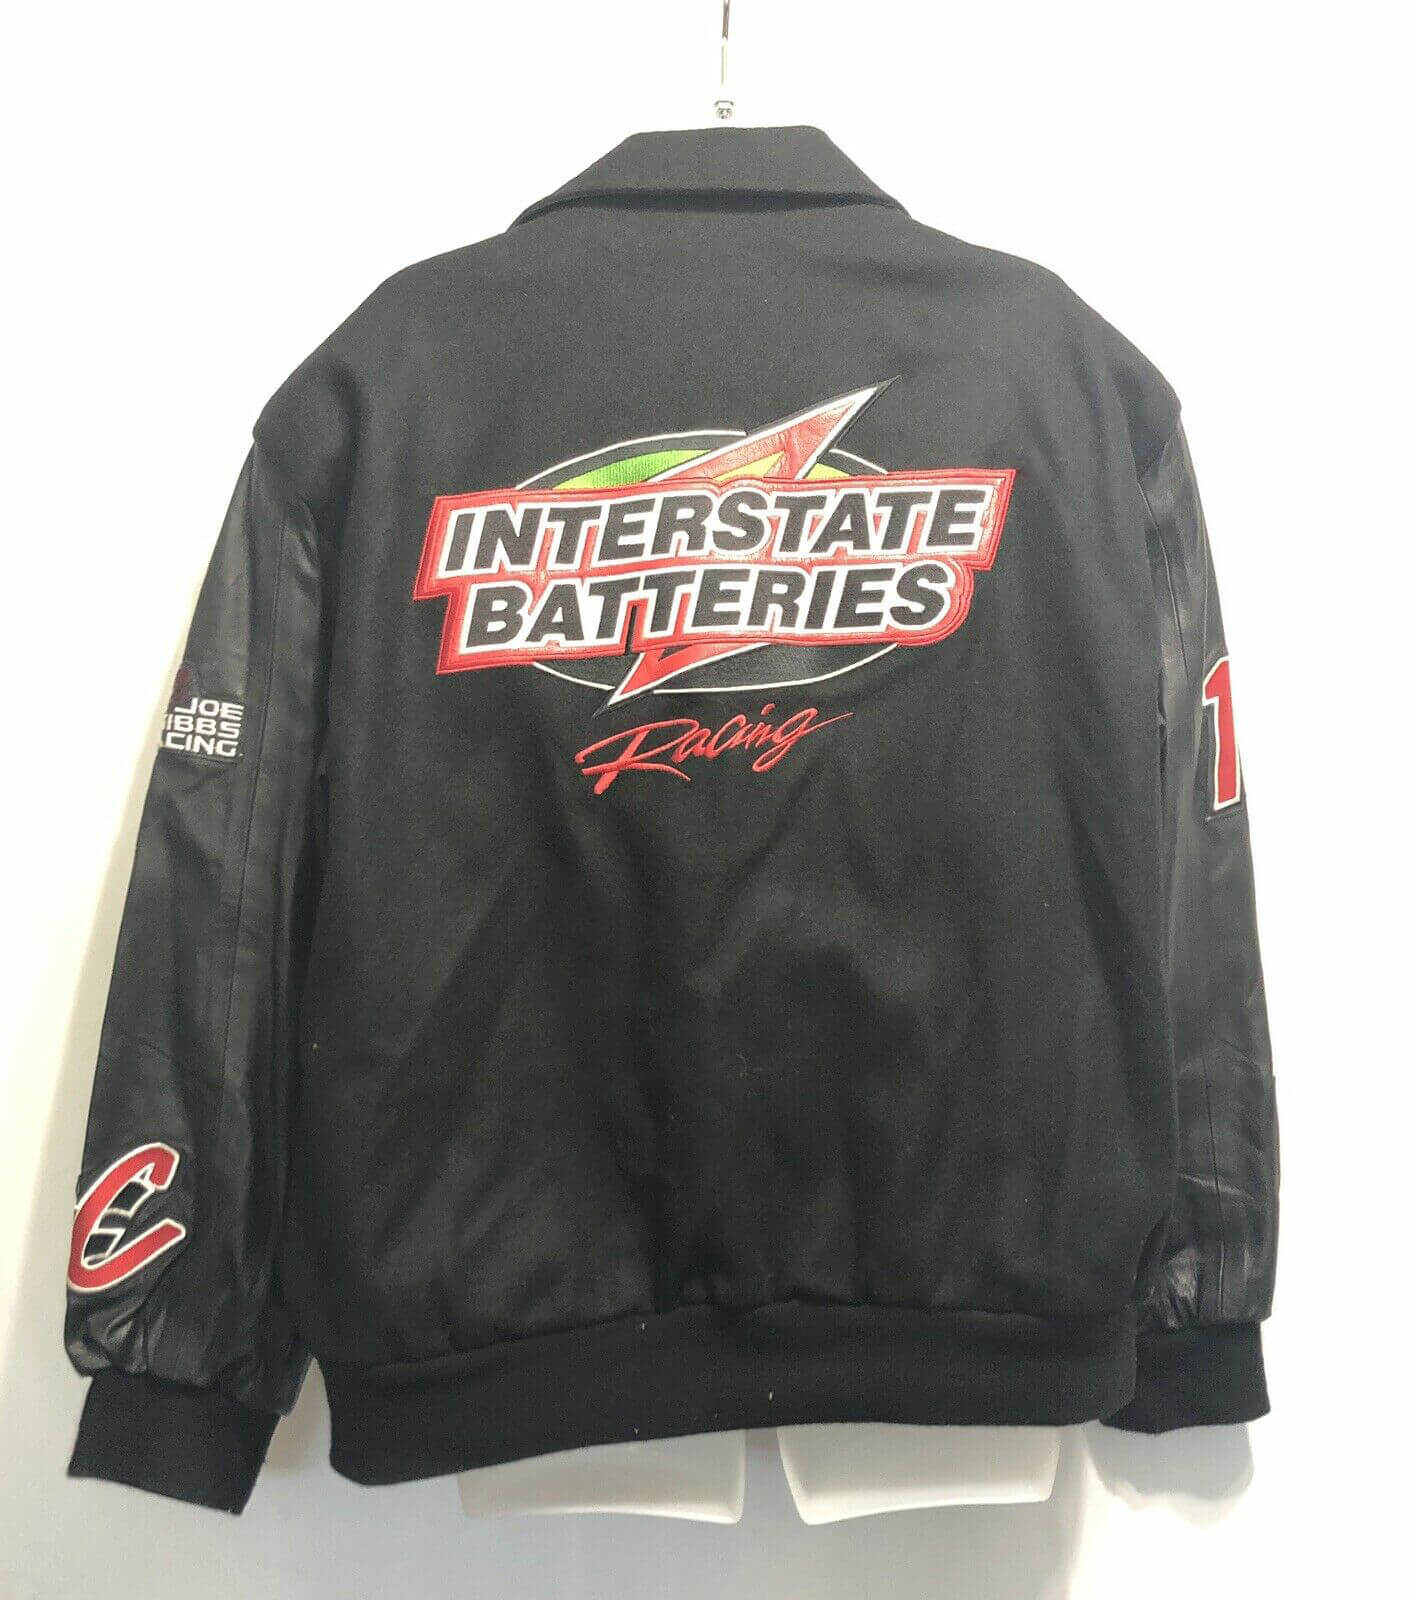 NASCAR Interstate Batteries Joe Gibbs Racing Jacket - Maker of Jacket